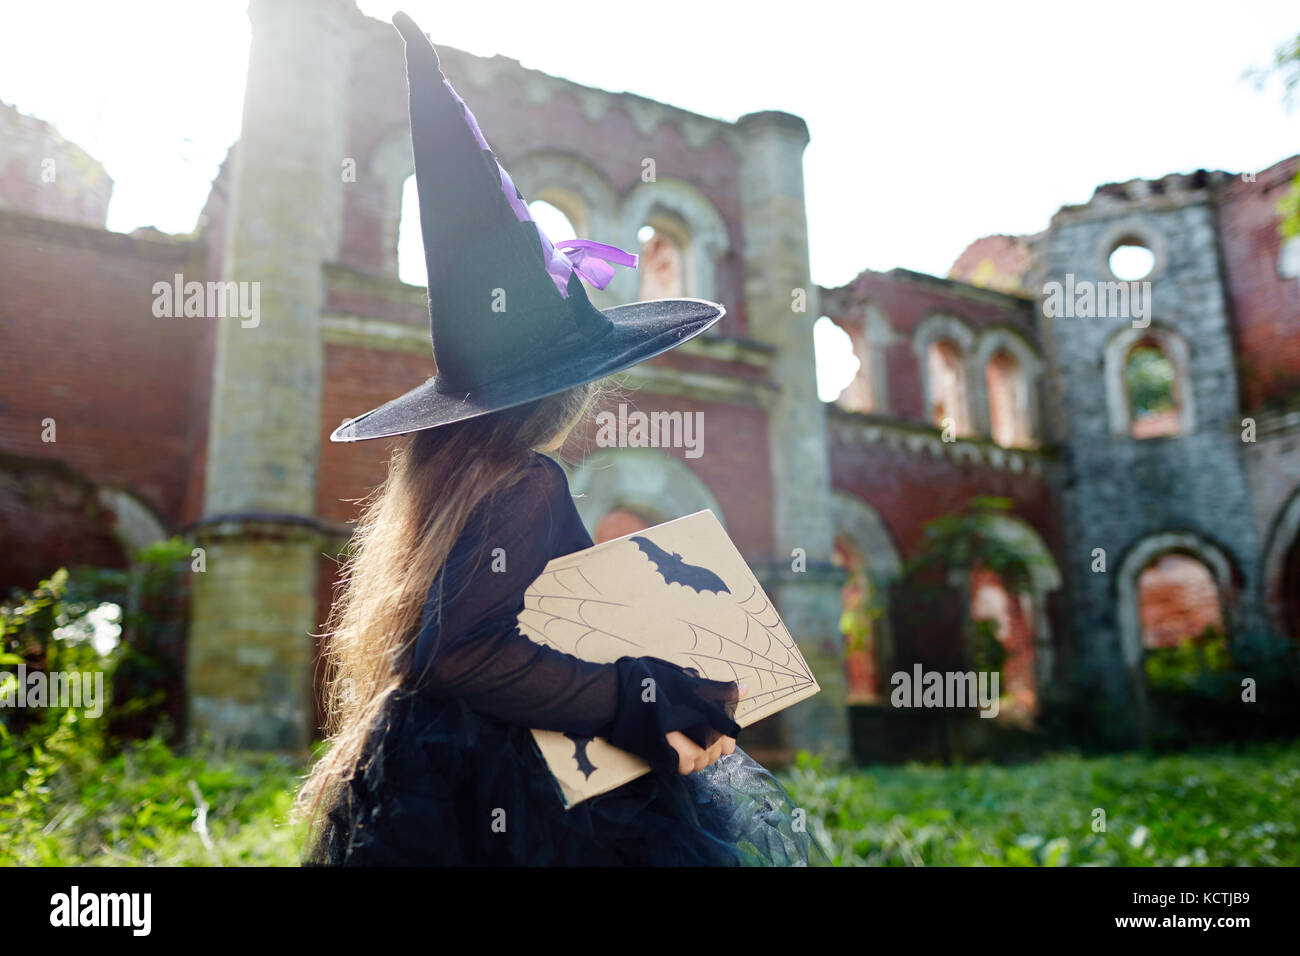 Witch on promenade Stock Photo